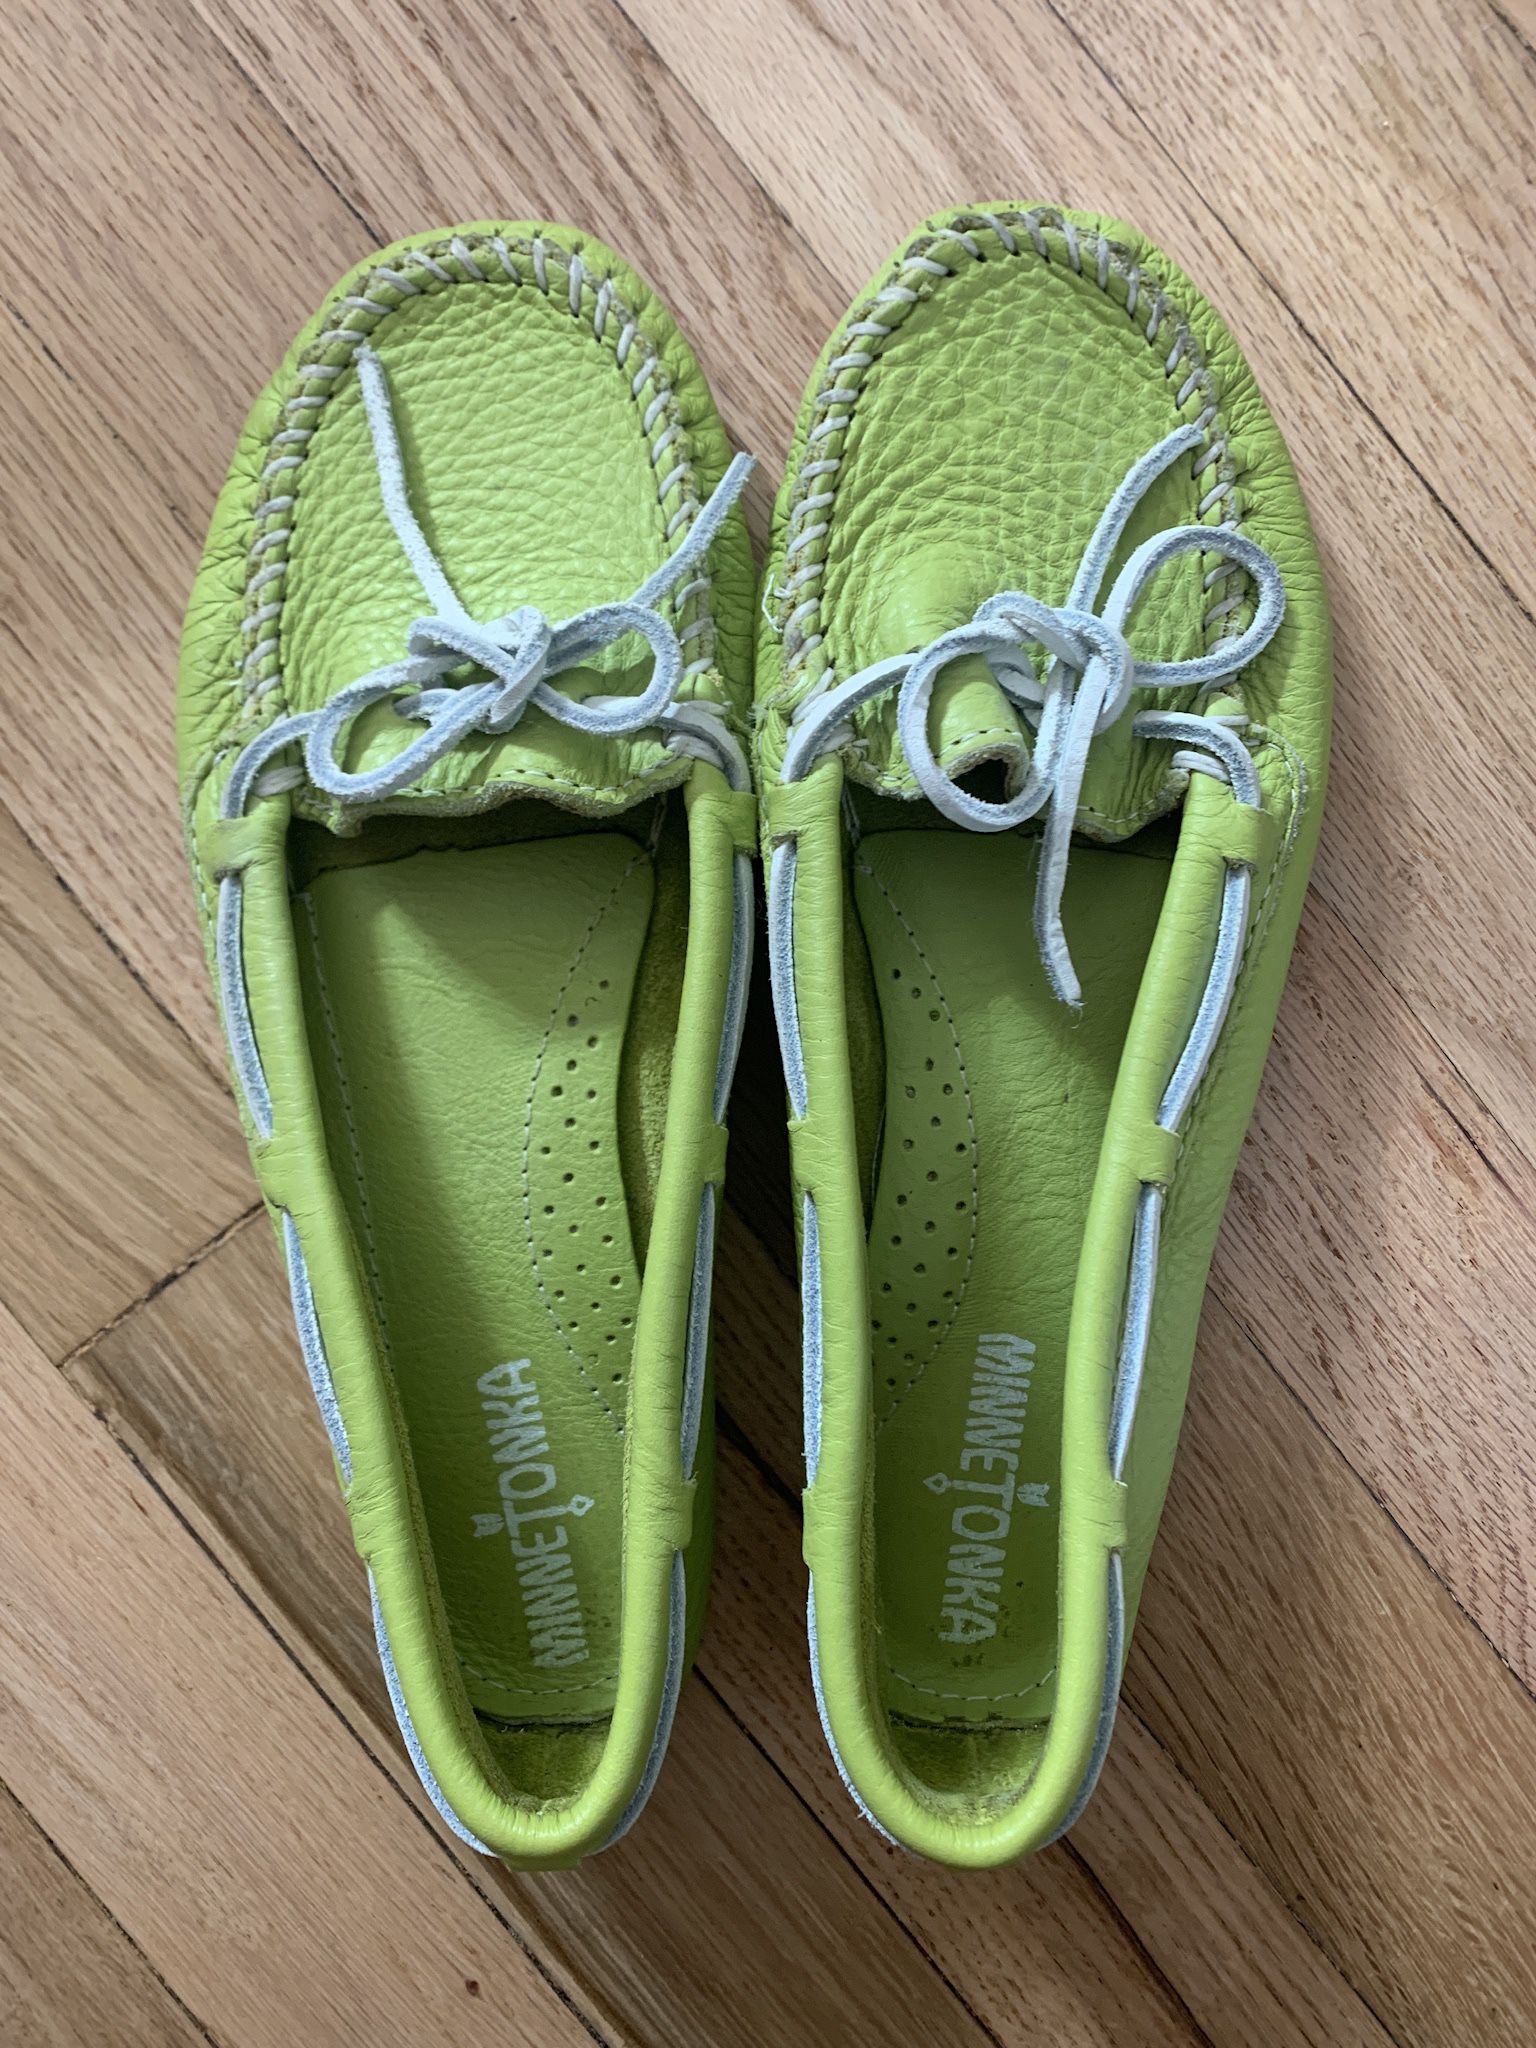 Minnetonka Lime Green Loafers Size Women’s 7.5 Fits Like An 8 for Sale ...